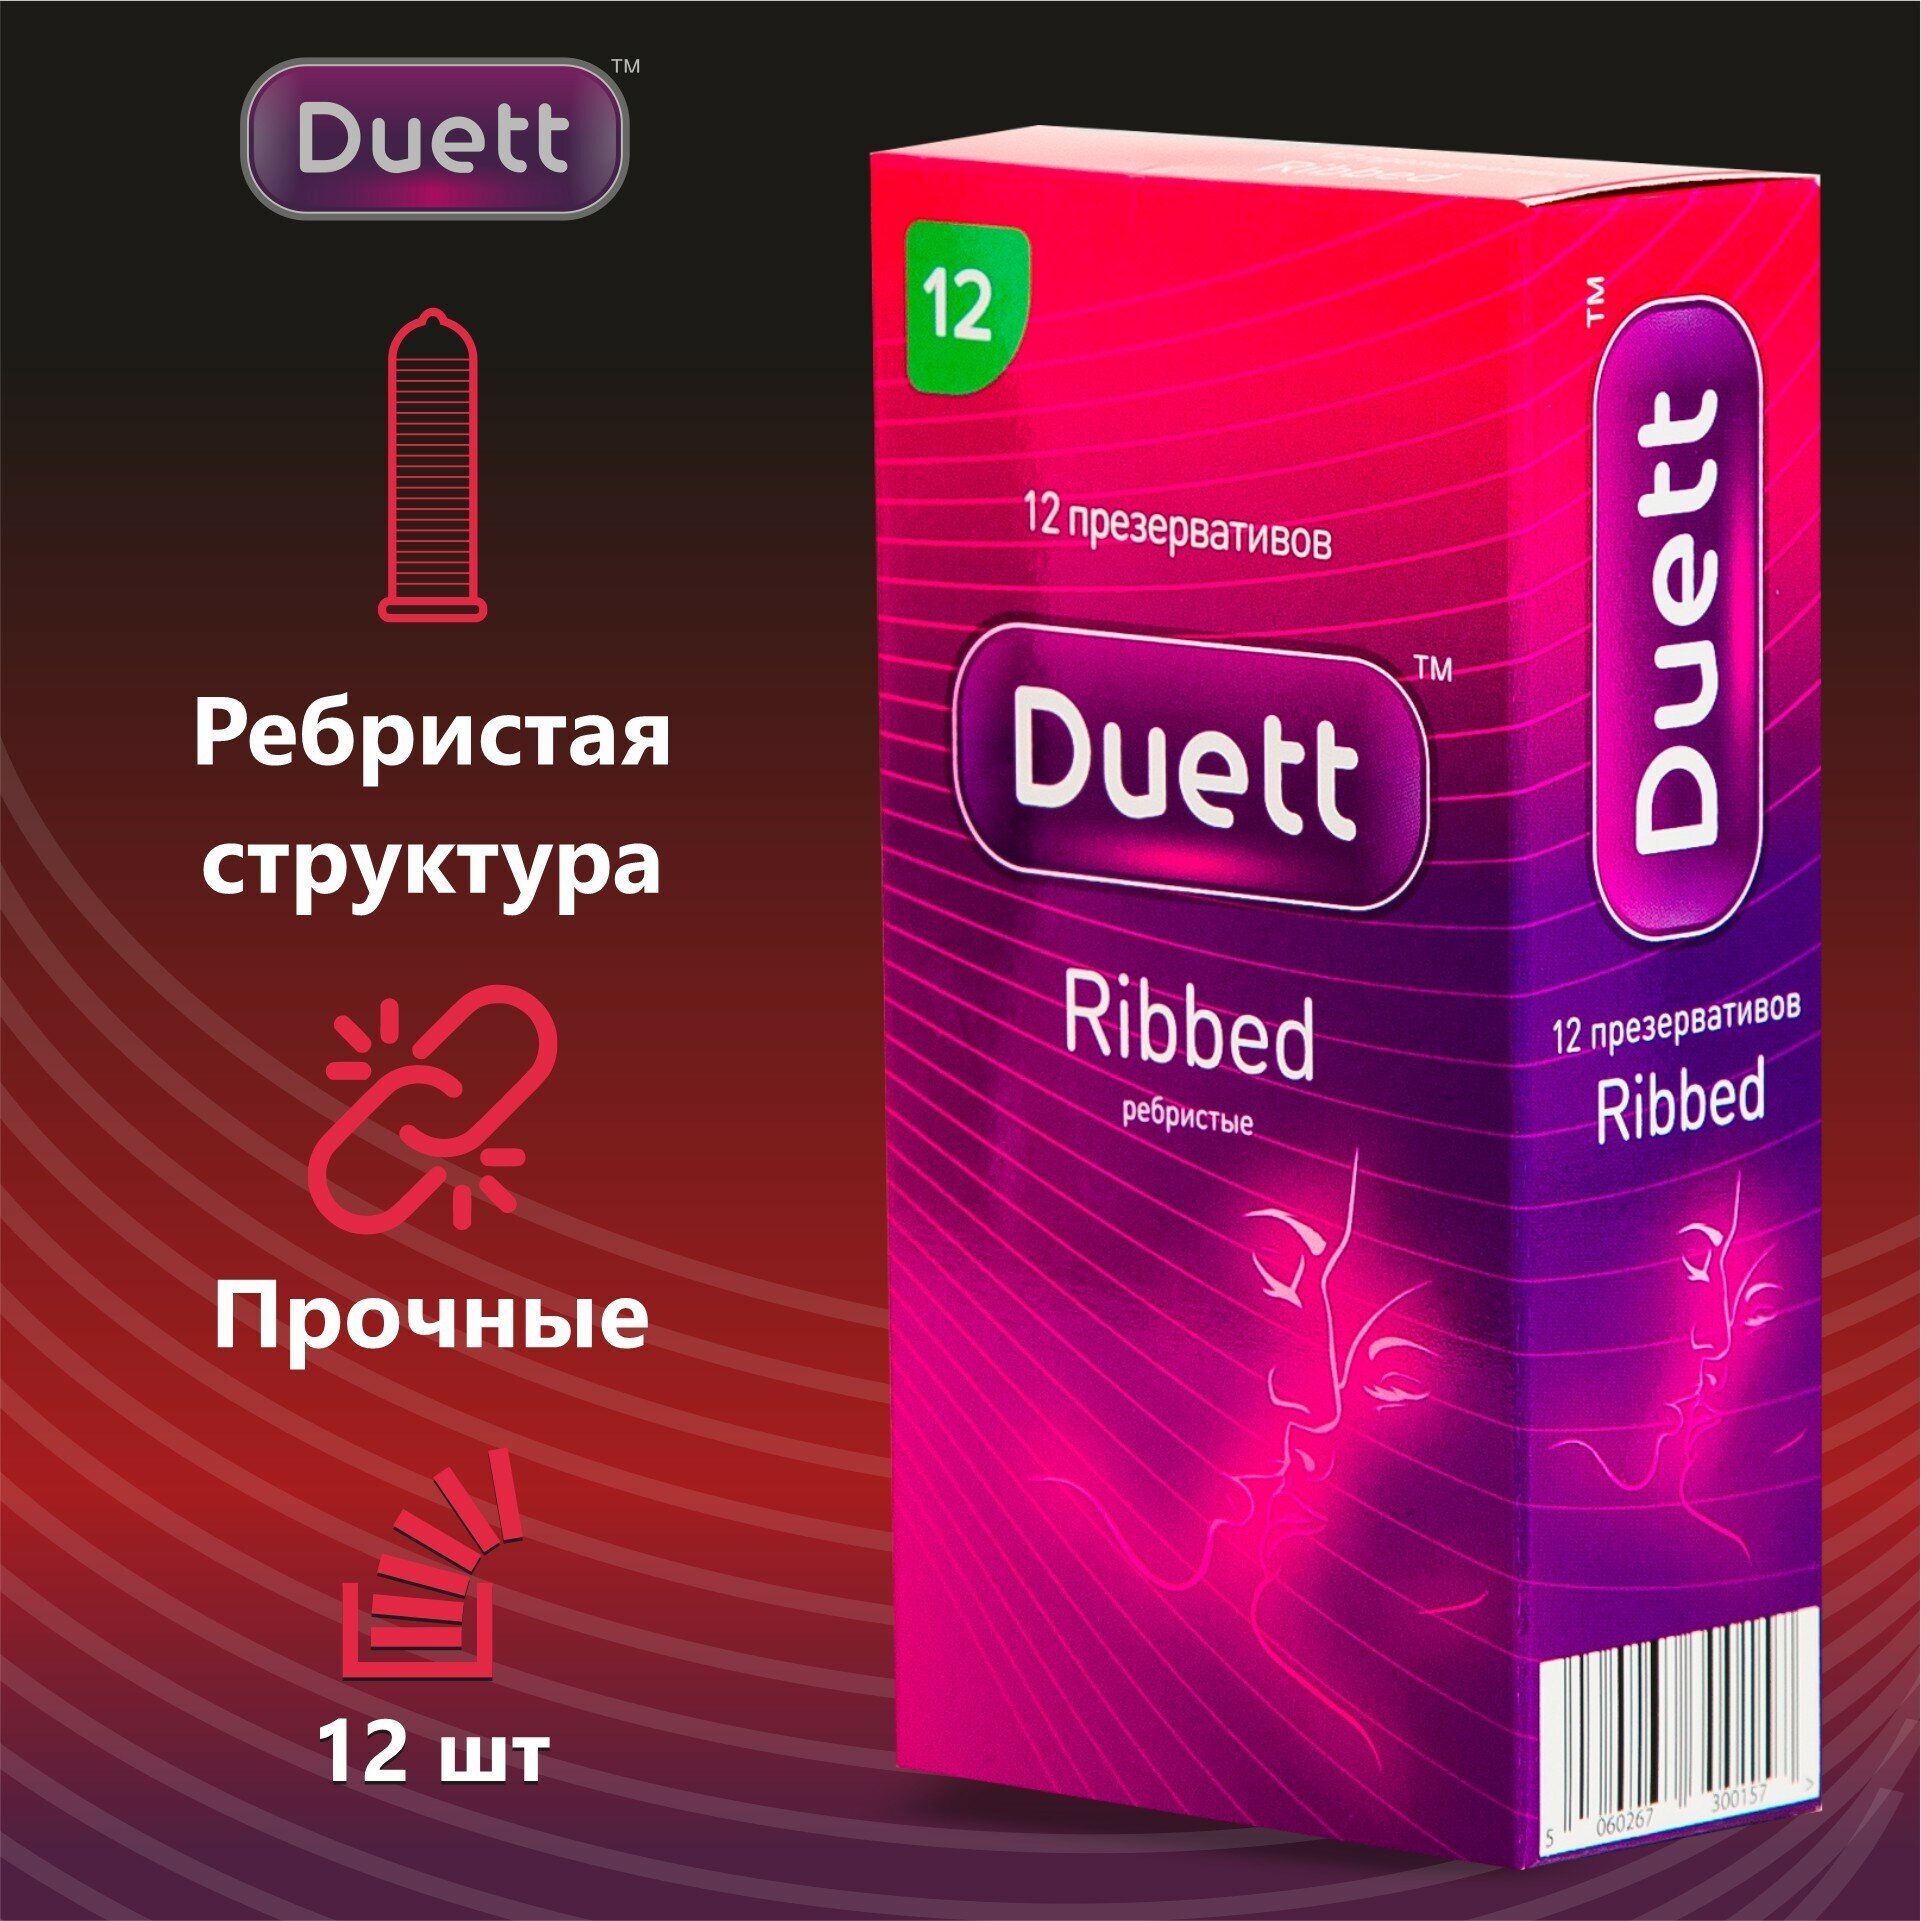 Презервативы DUETT Ribbed ребристые 12 штук